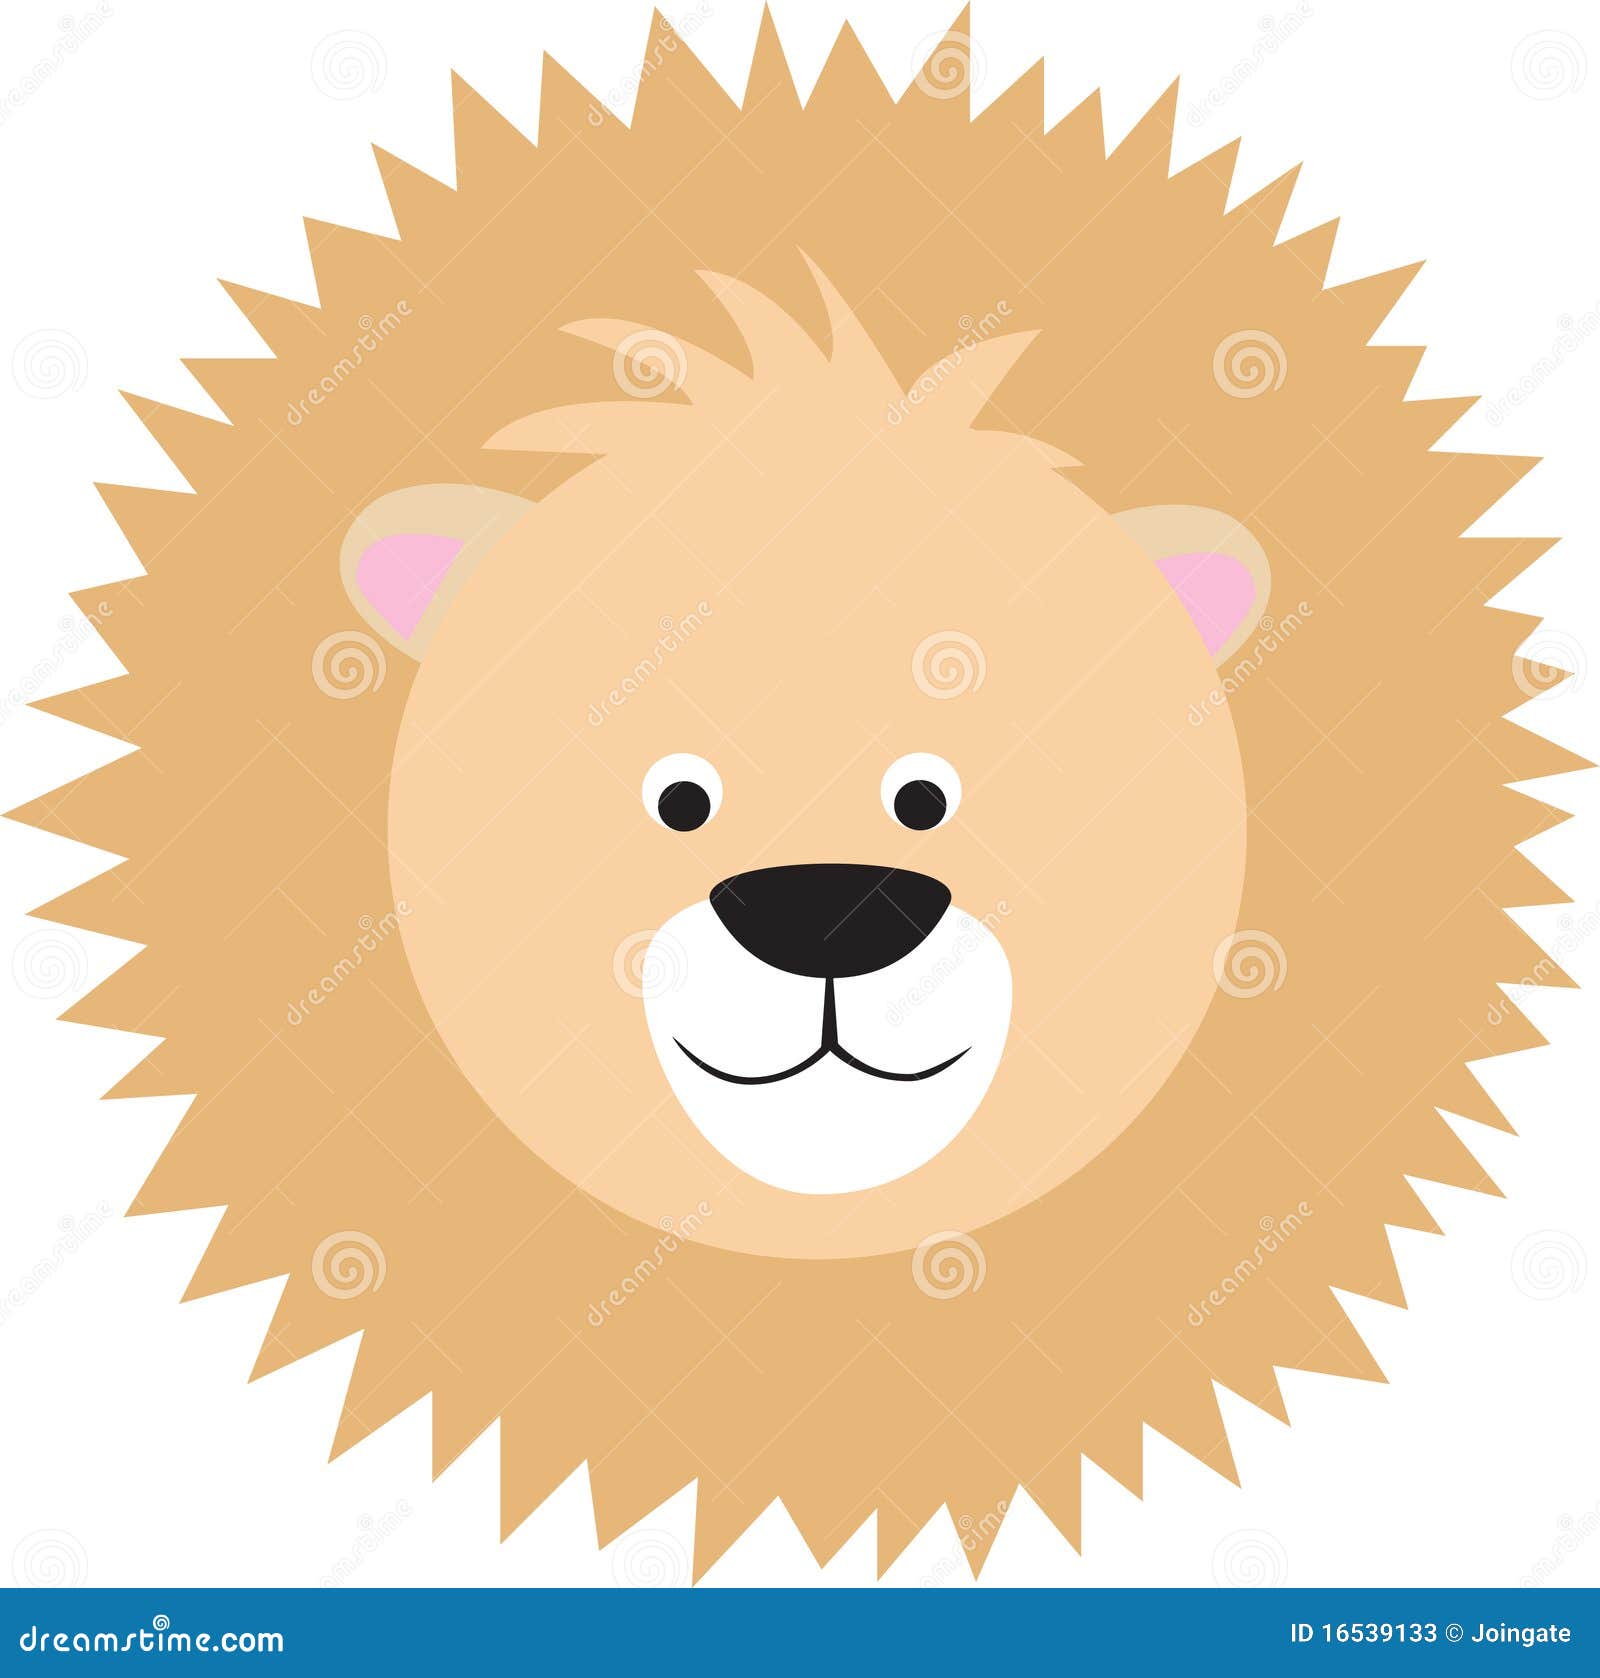 Cartoon lion face stock vector. Illustration of face - 16539133